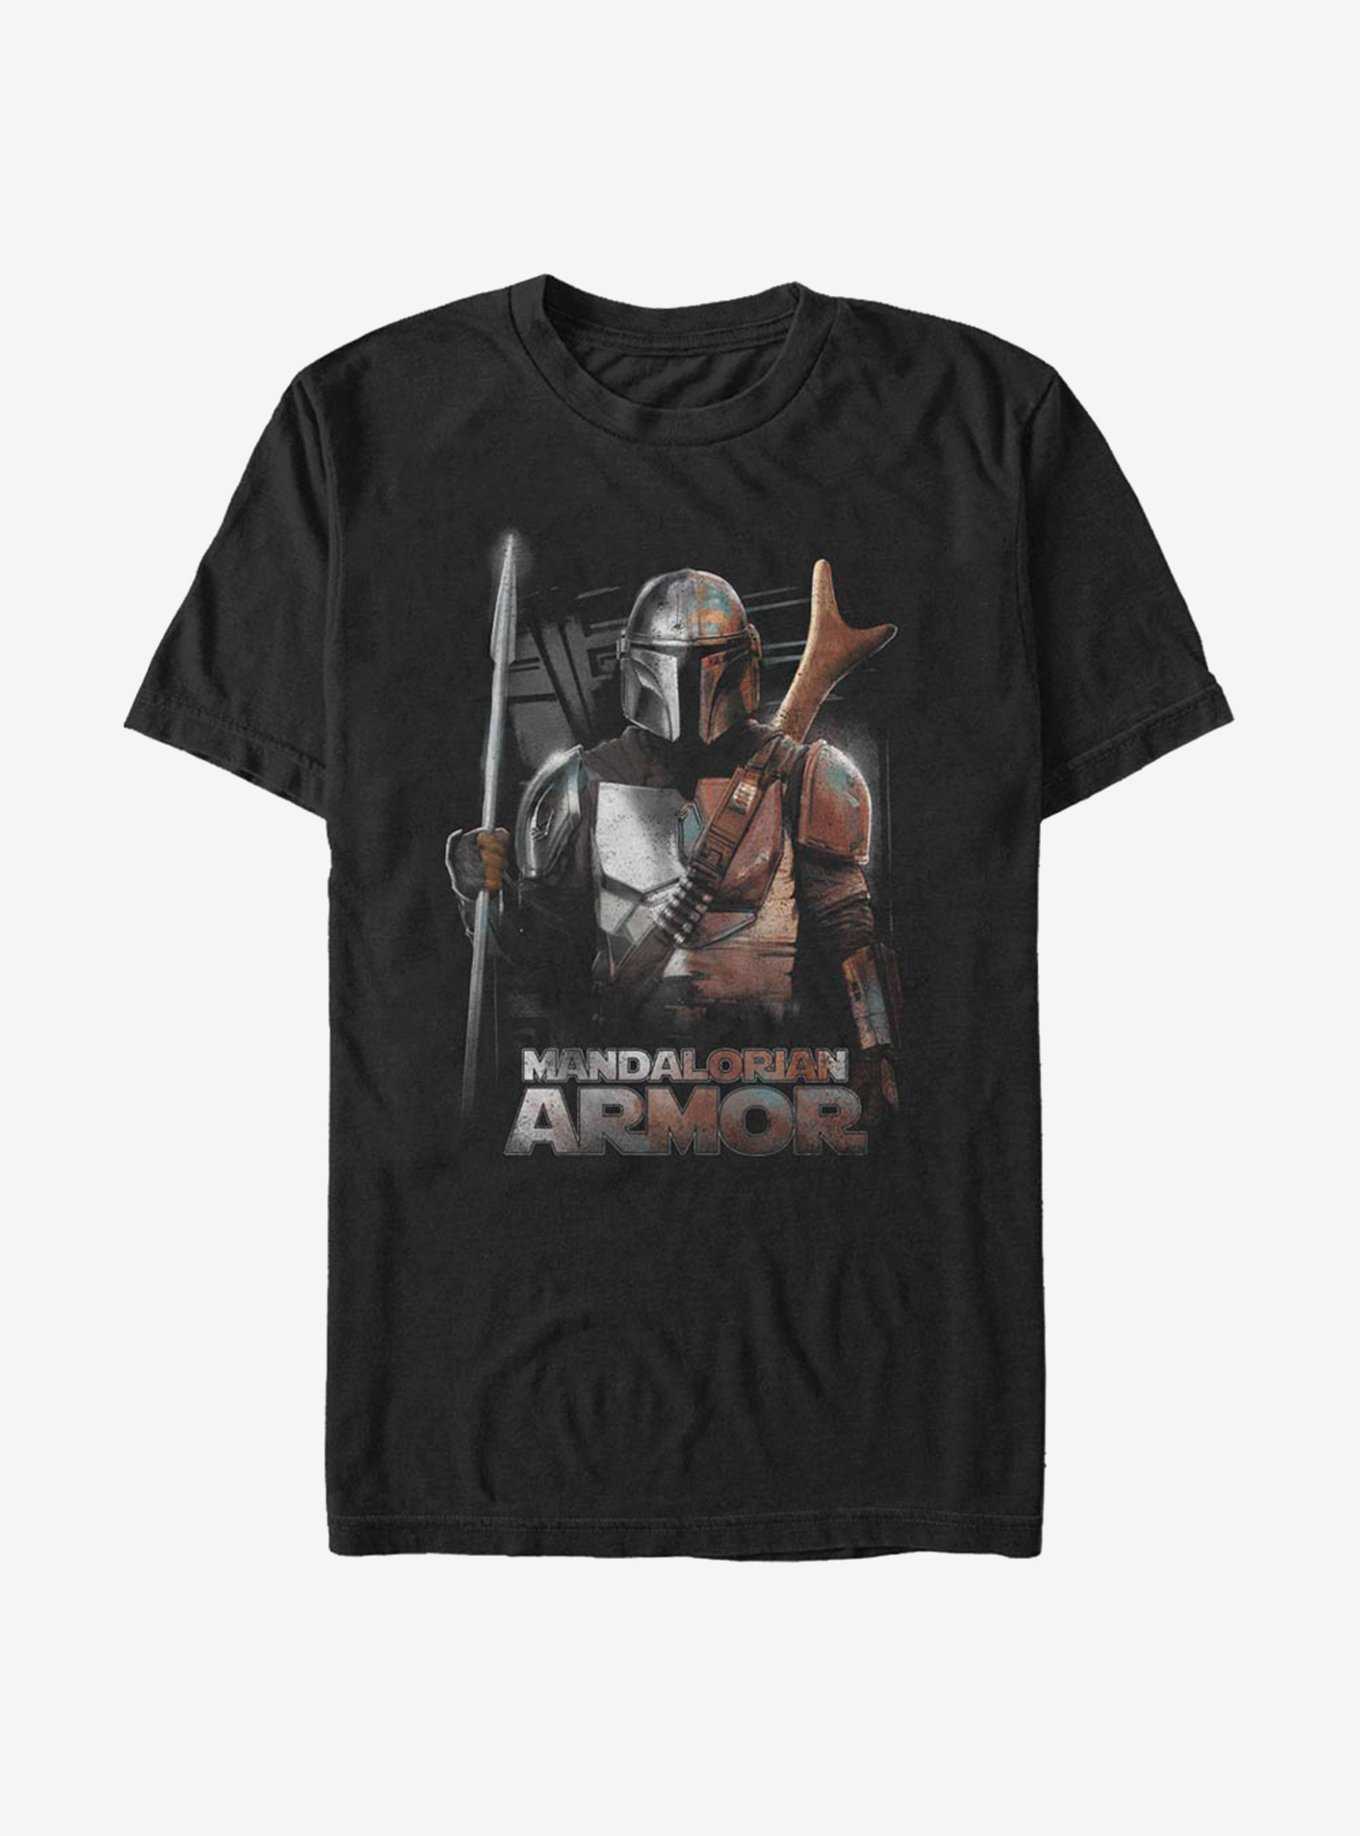 Star Wars The Mandalorian Season 2 Armor T-Shirt, , hi-res